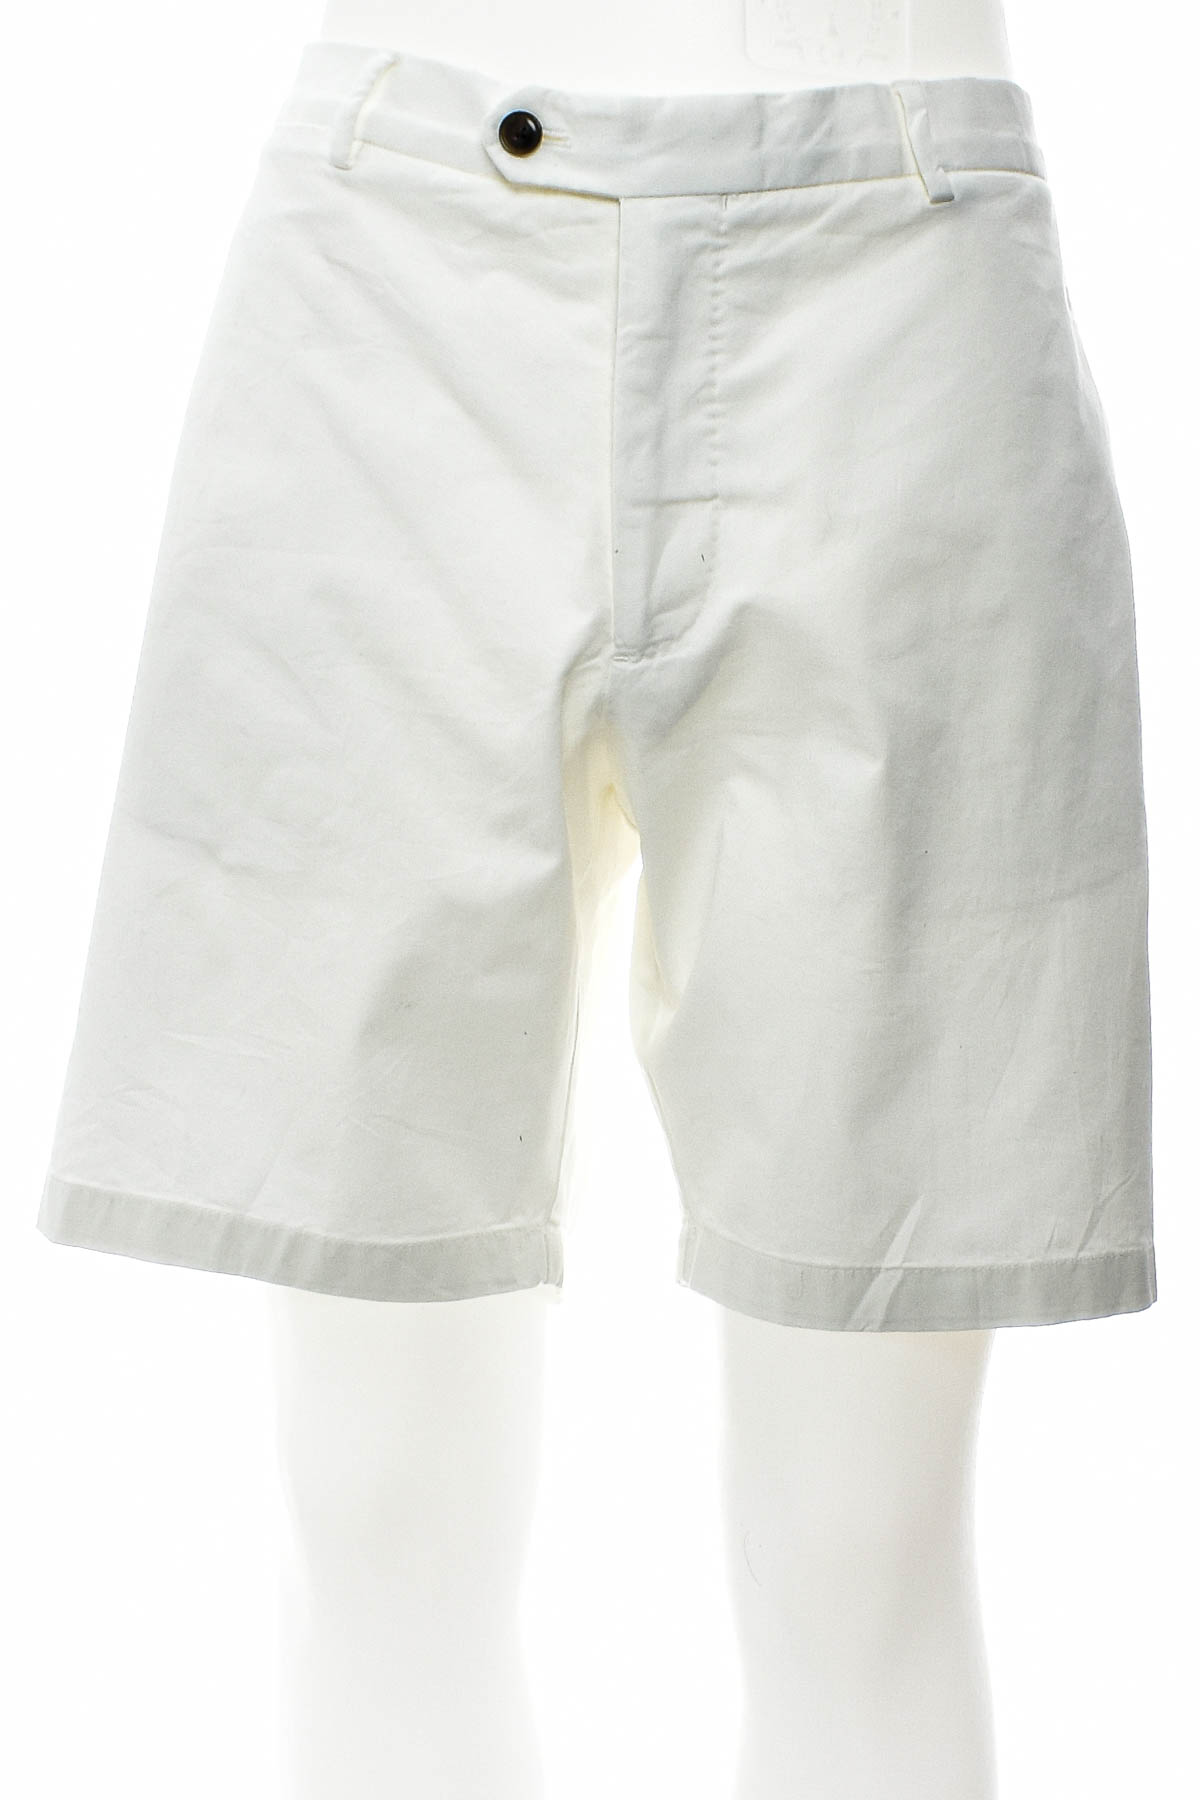 Men's shorts - TESSUTI DI SONDRIO - 0